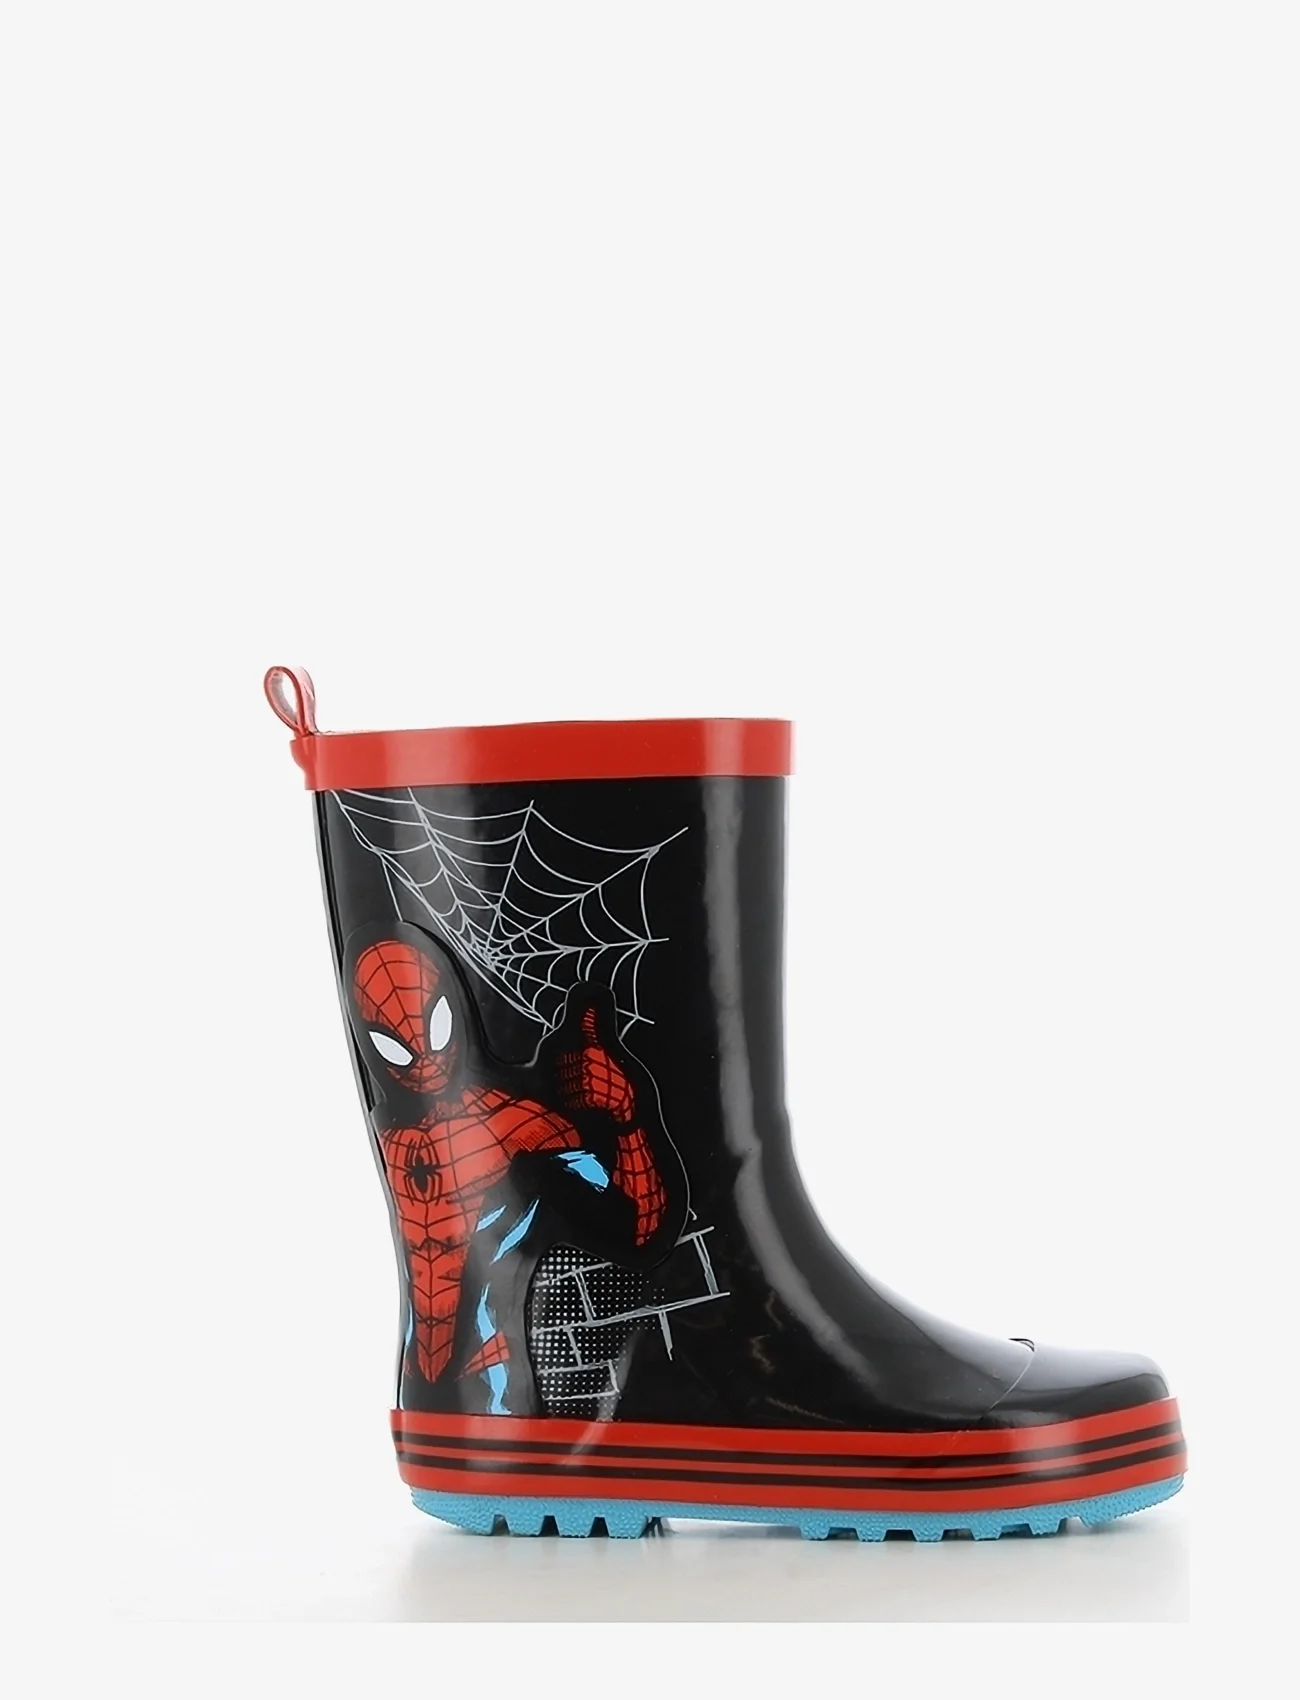 Leomil - SPIDERMAN rainboots - unlined rubberboots - black/red - 0